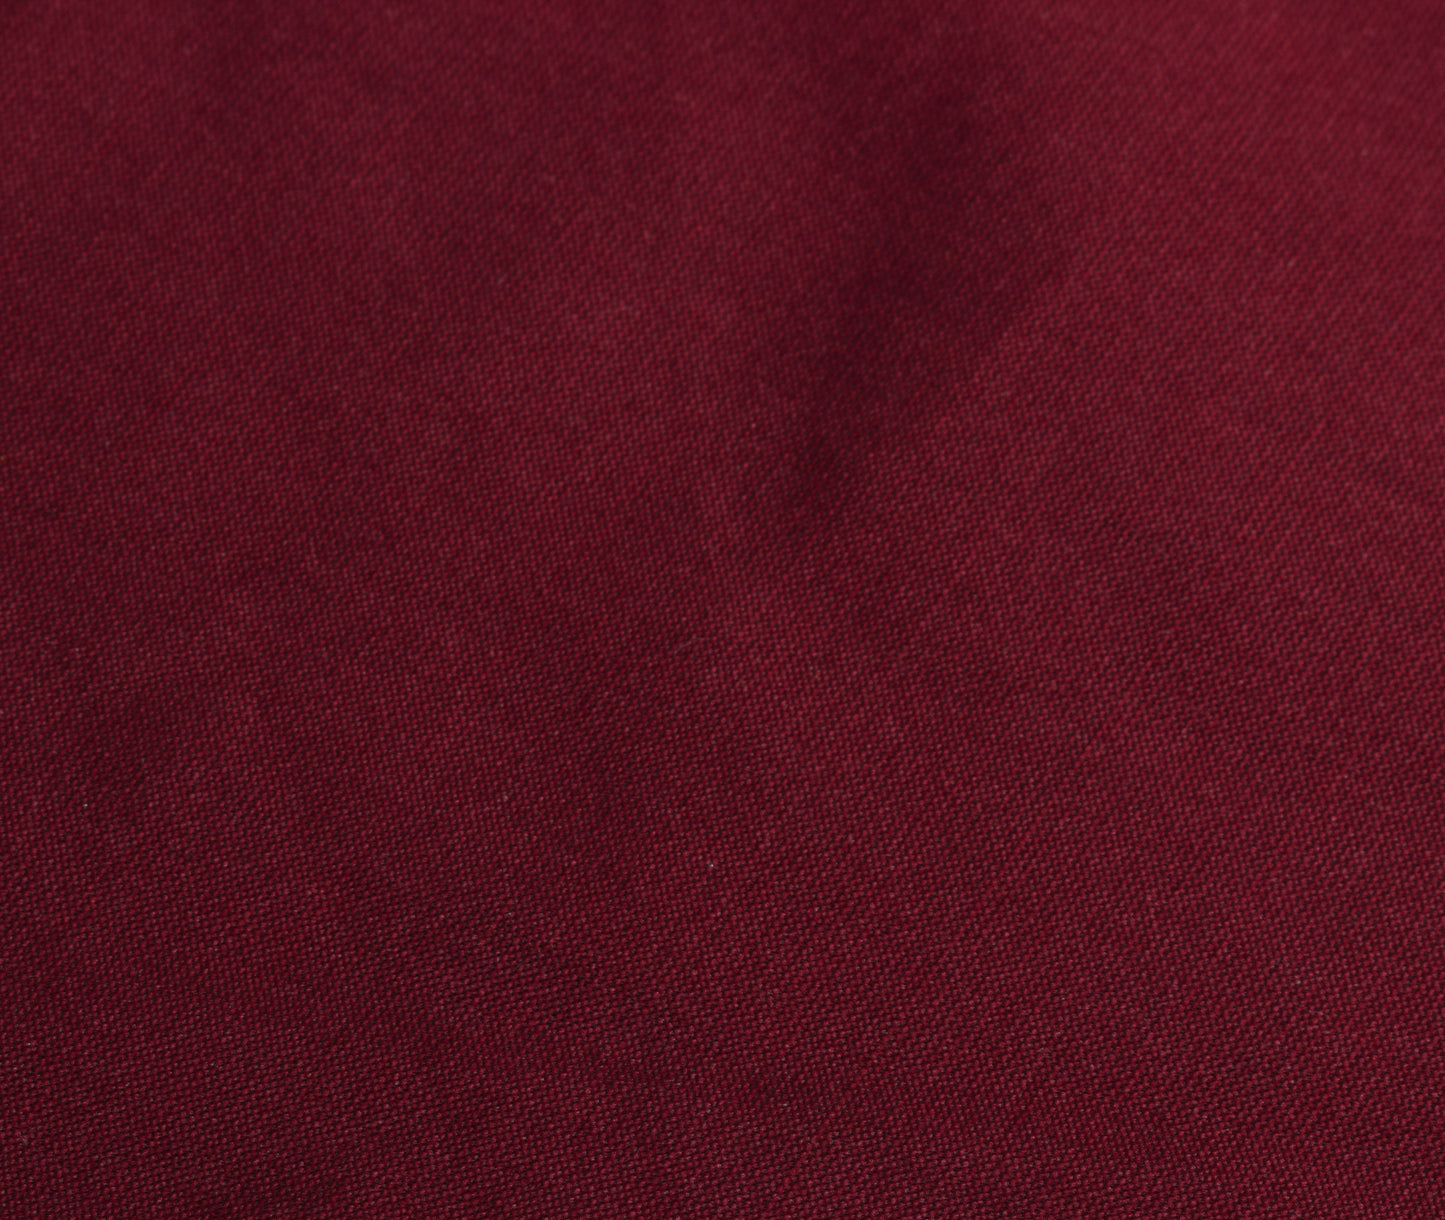 Sushila Vintage Maroon Sari Remnant Scrap Multi Purpose Blend Silk Craft Fabric